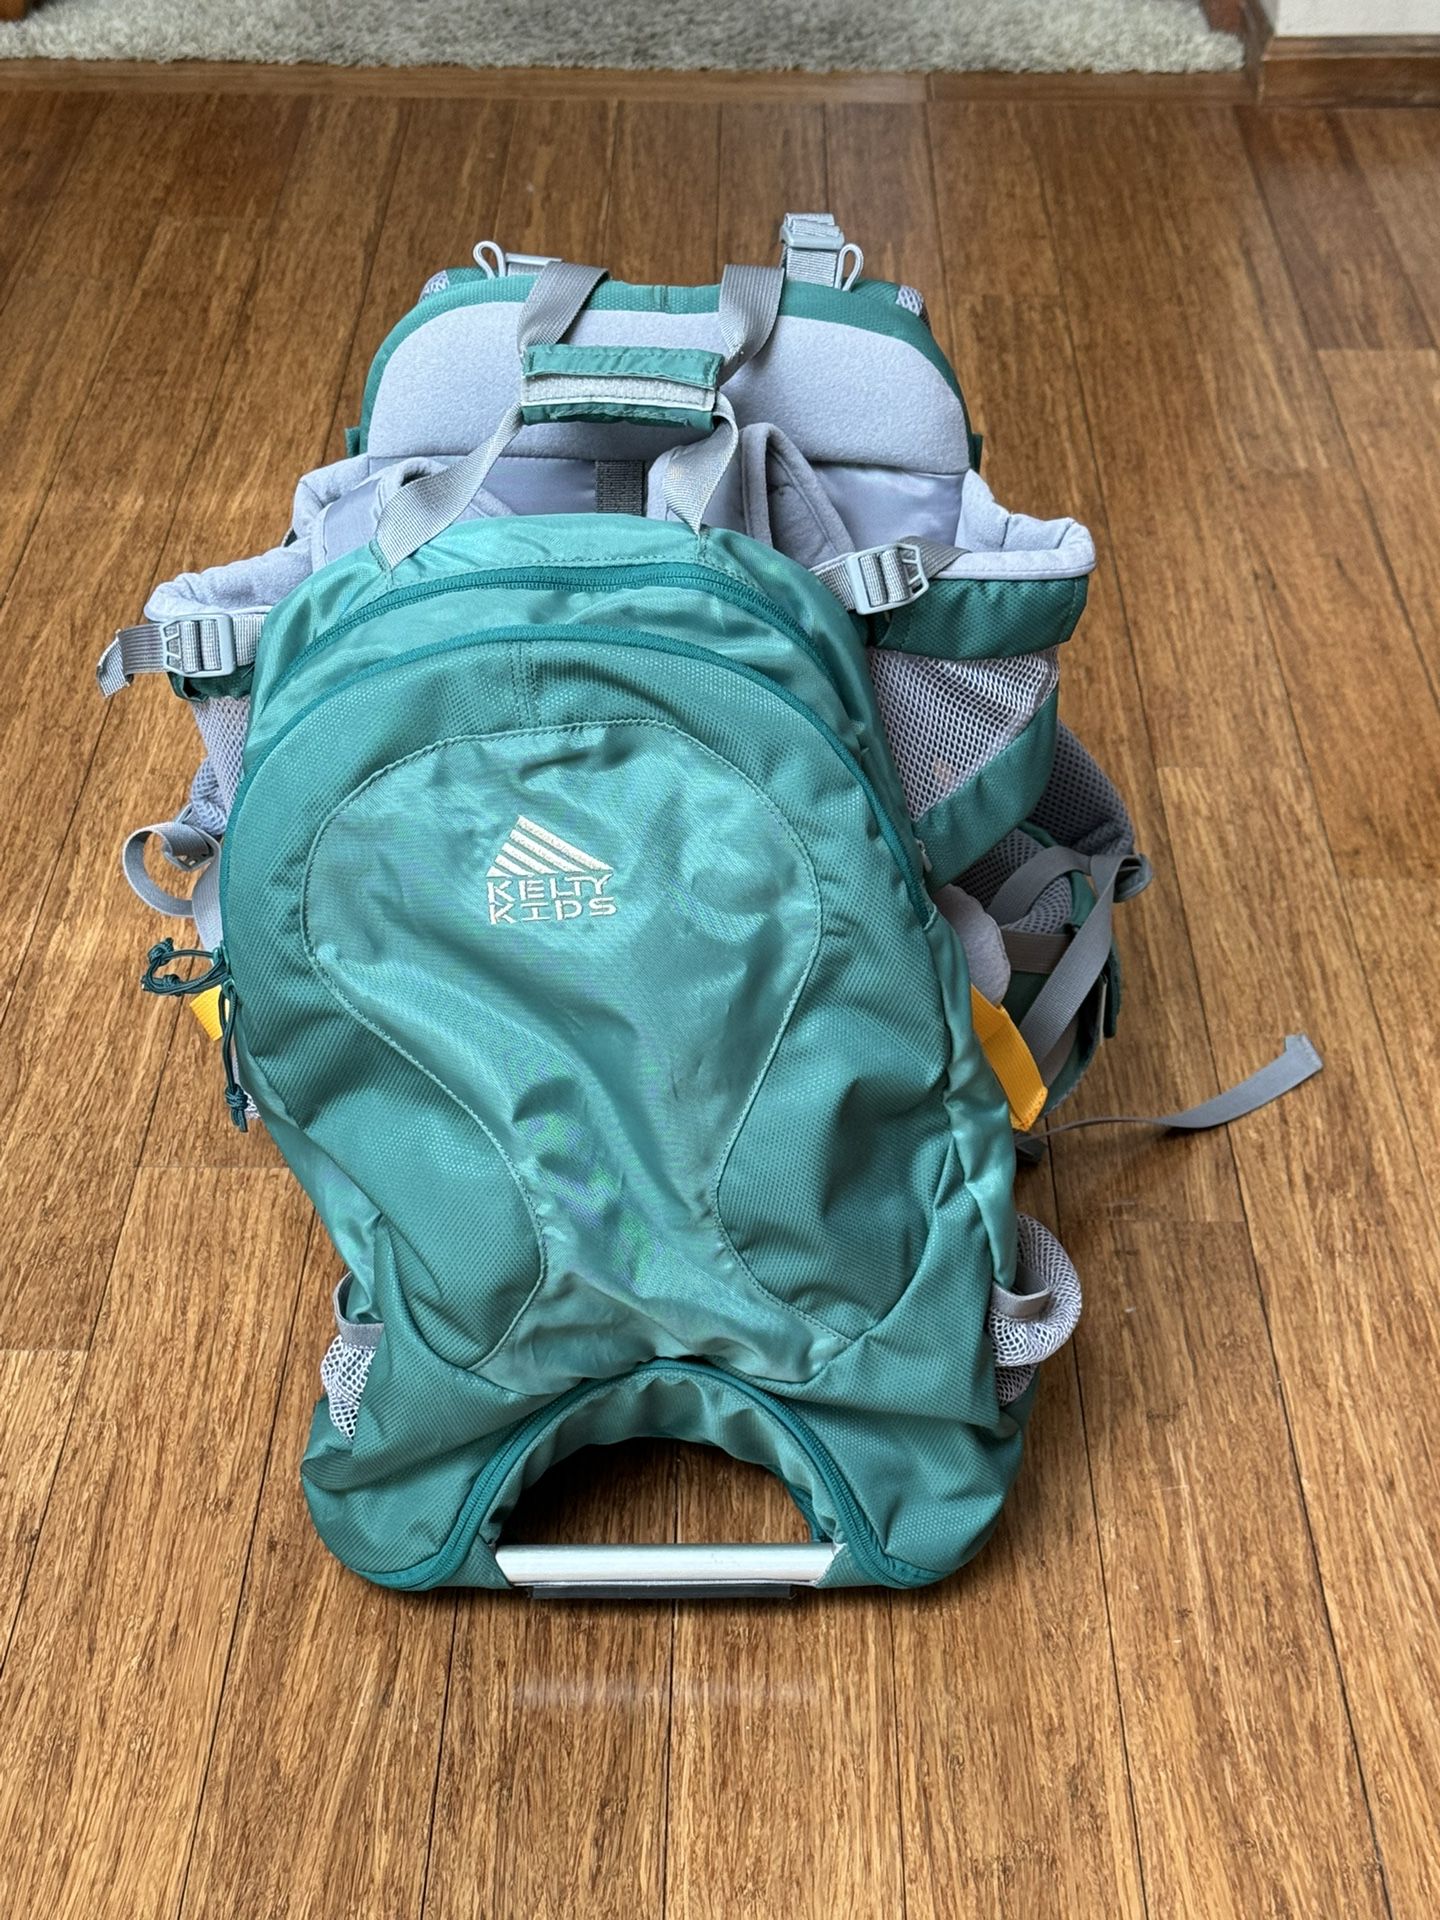 Kelty Kids Junction 2.0 Child Carrier/Backpack/Hiking